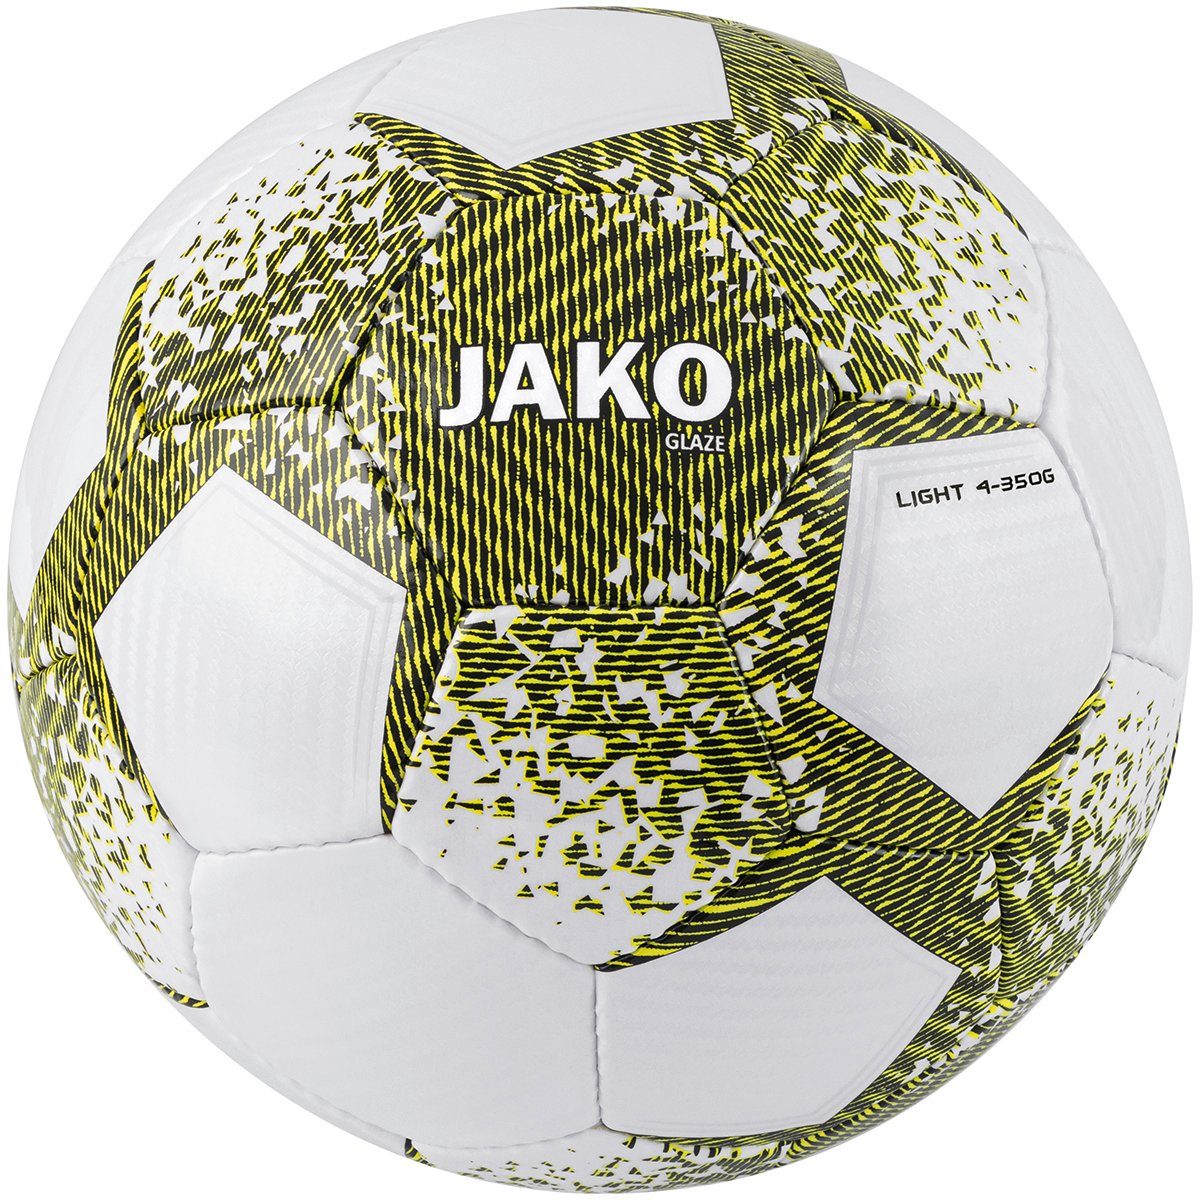 Fußball Jako weiß/schwarz/soft Glaze Fußball yellow-350g Lightball